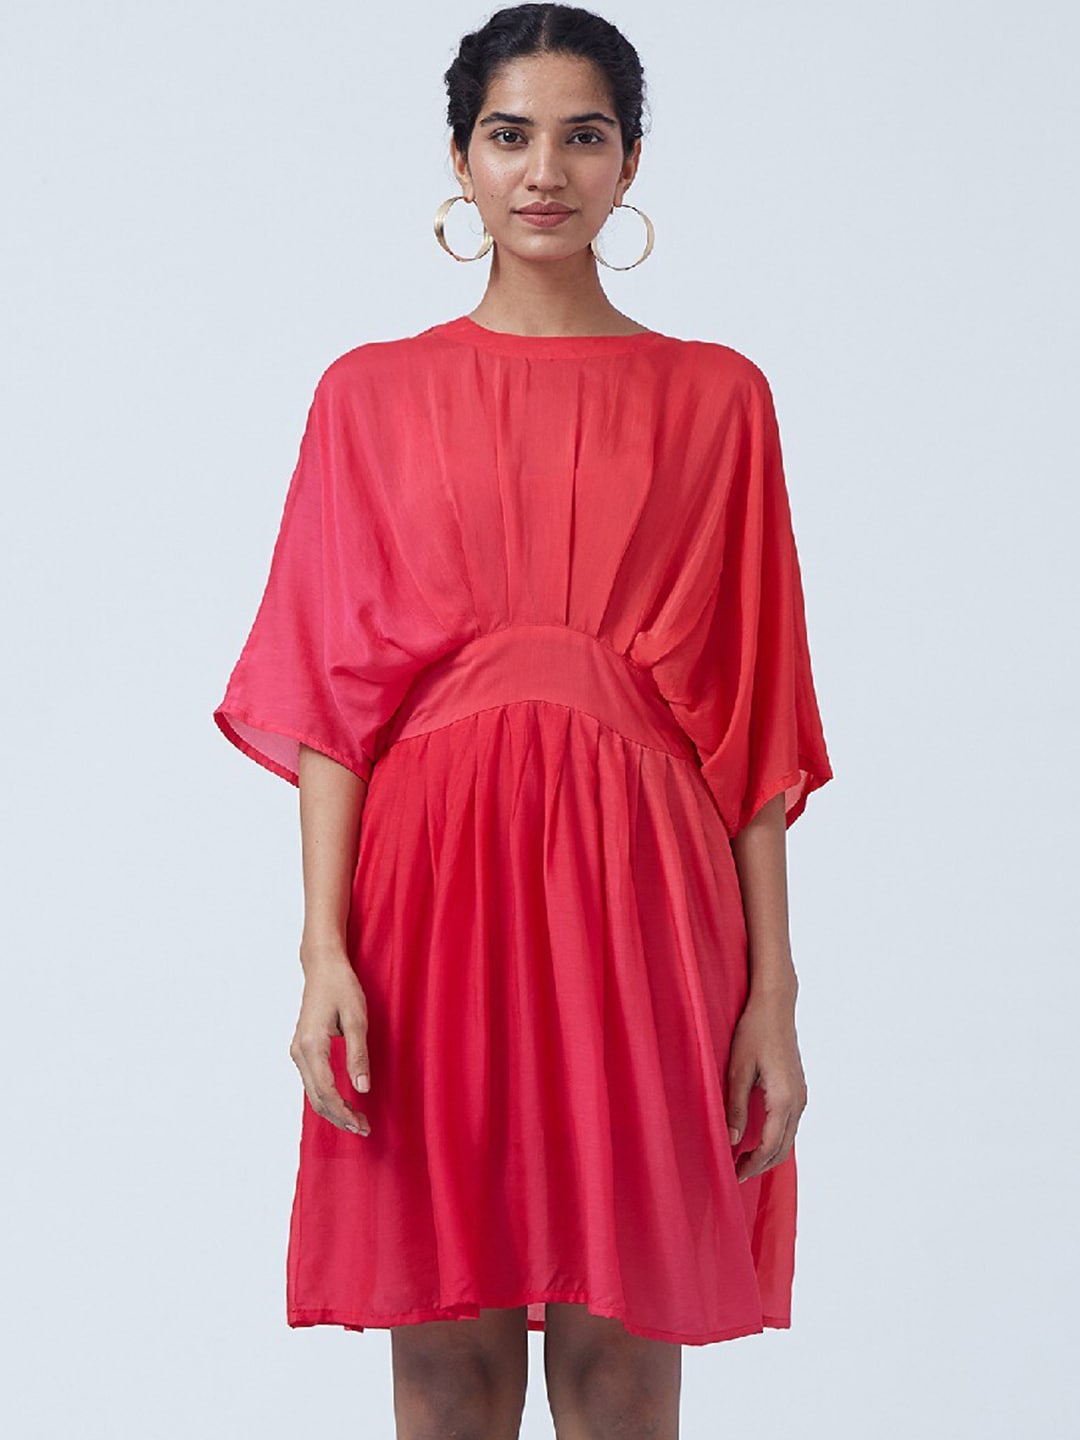 OKHAI Red Dress Price in India